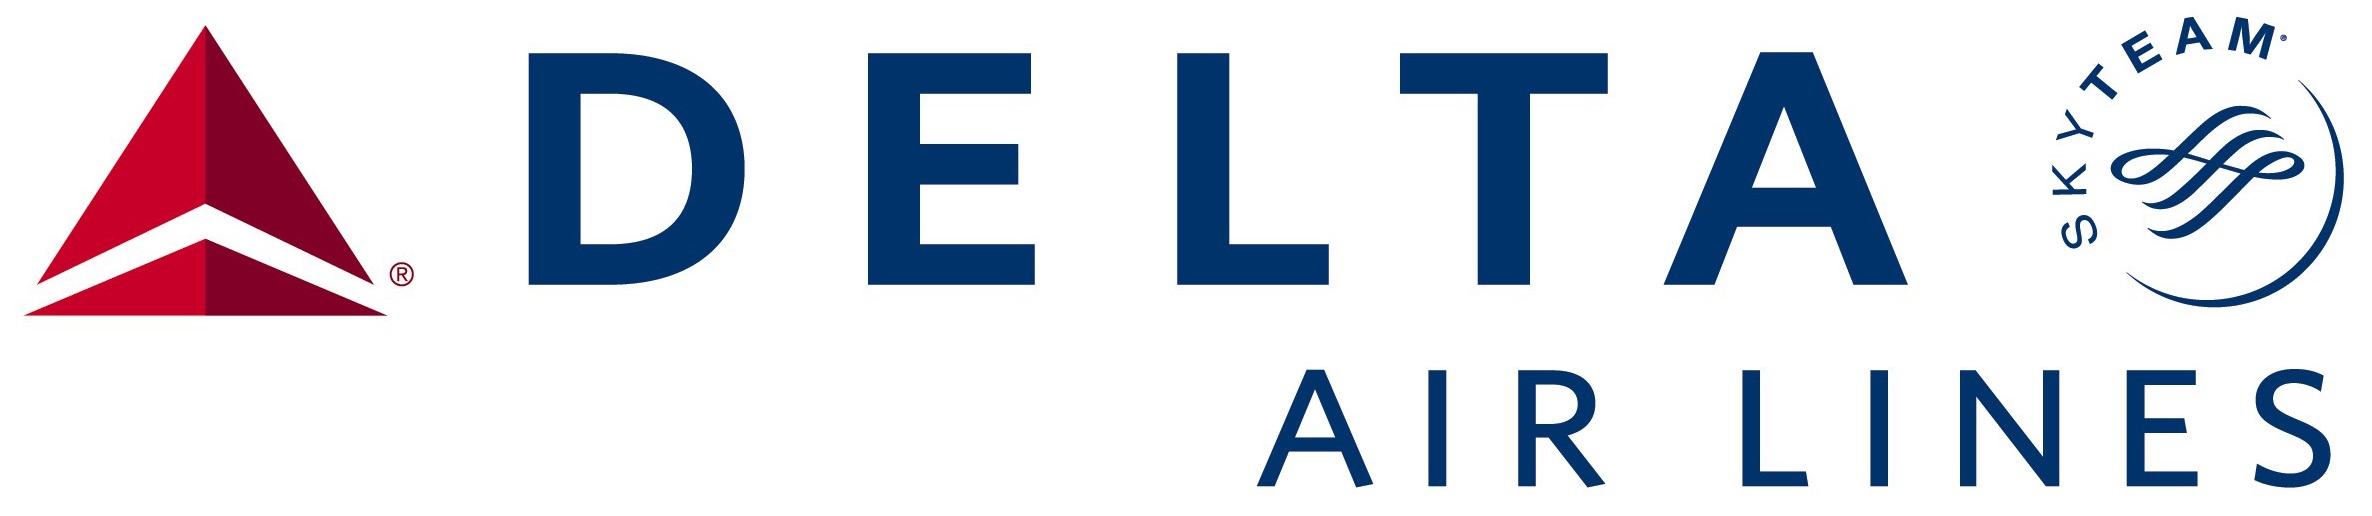 Image result for delta airlines logo images